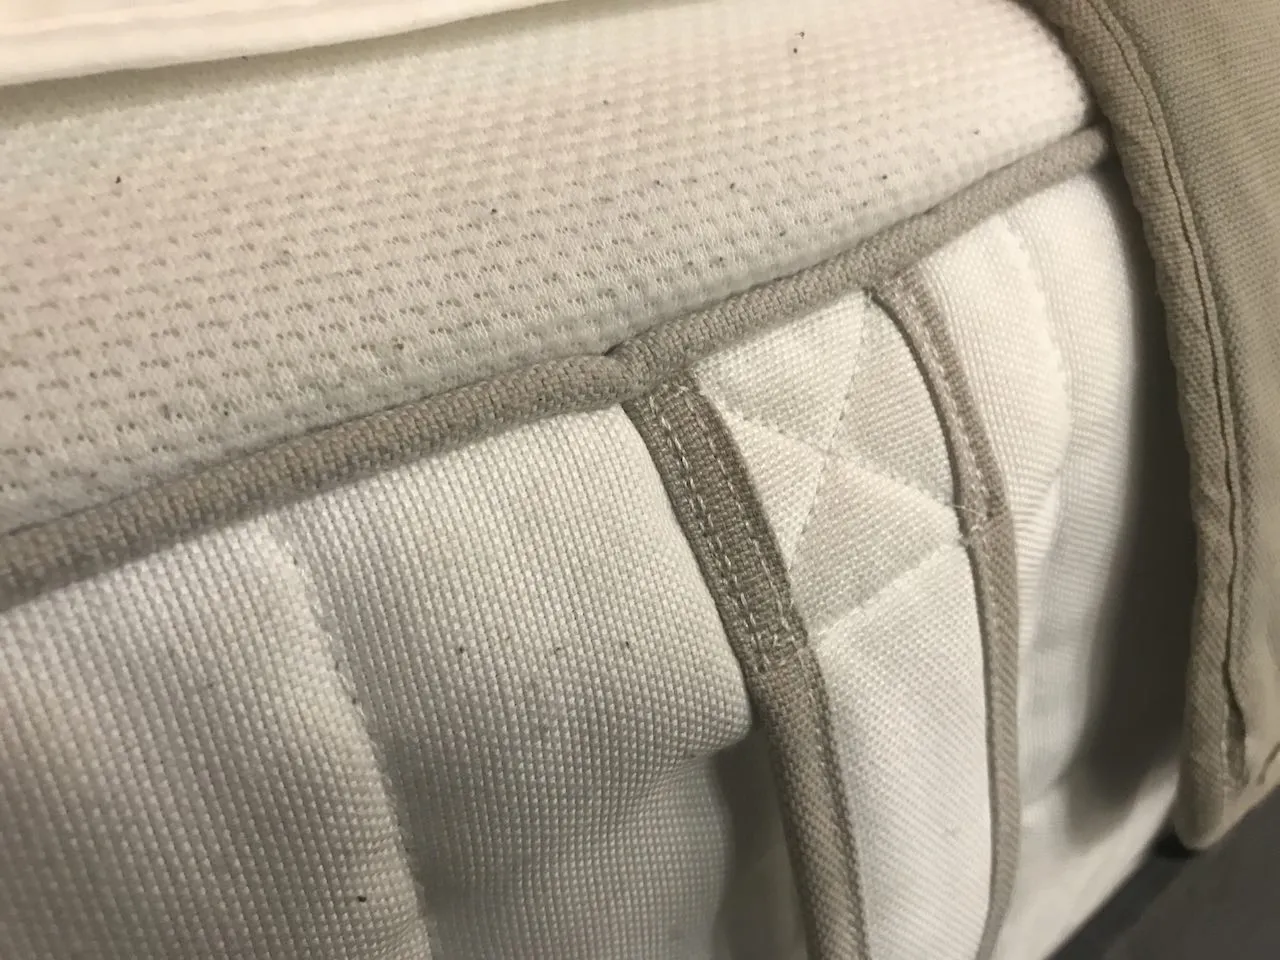 The handle of an ikea mattress up close